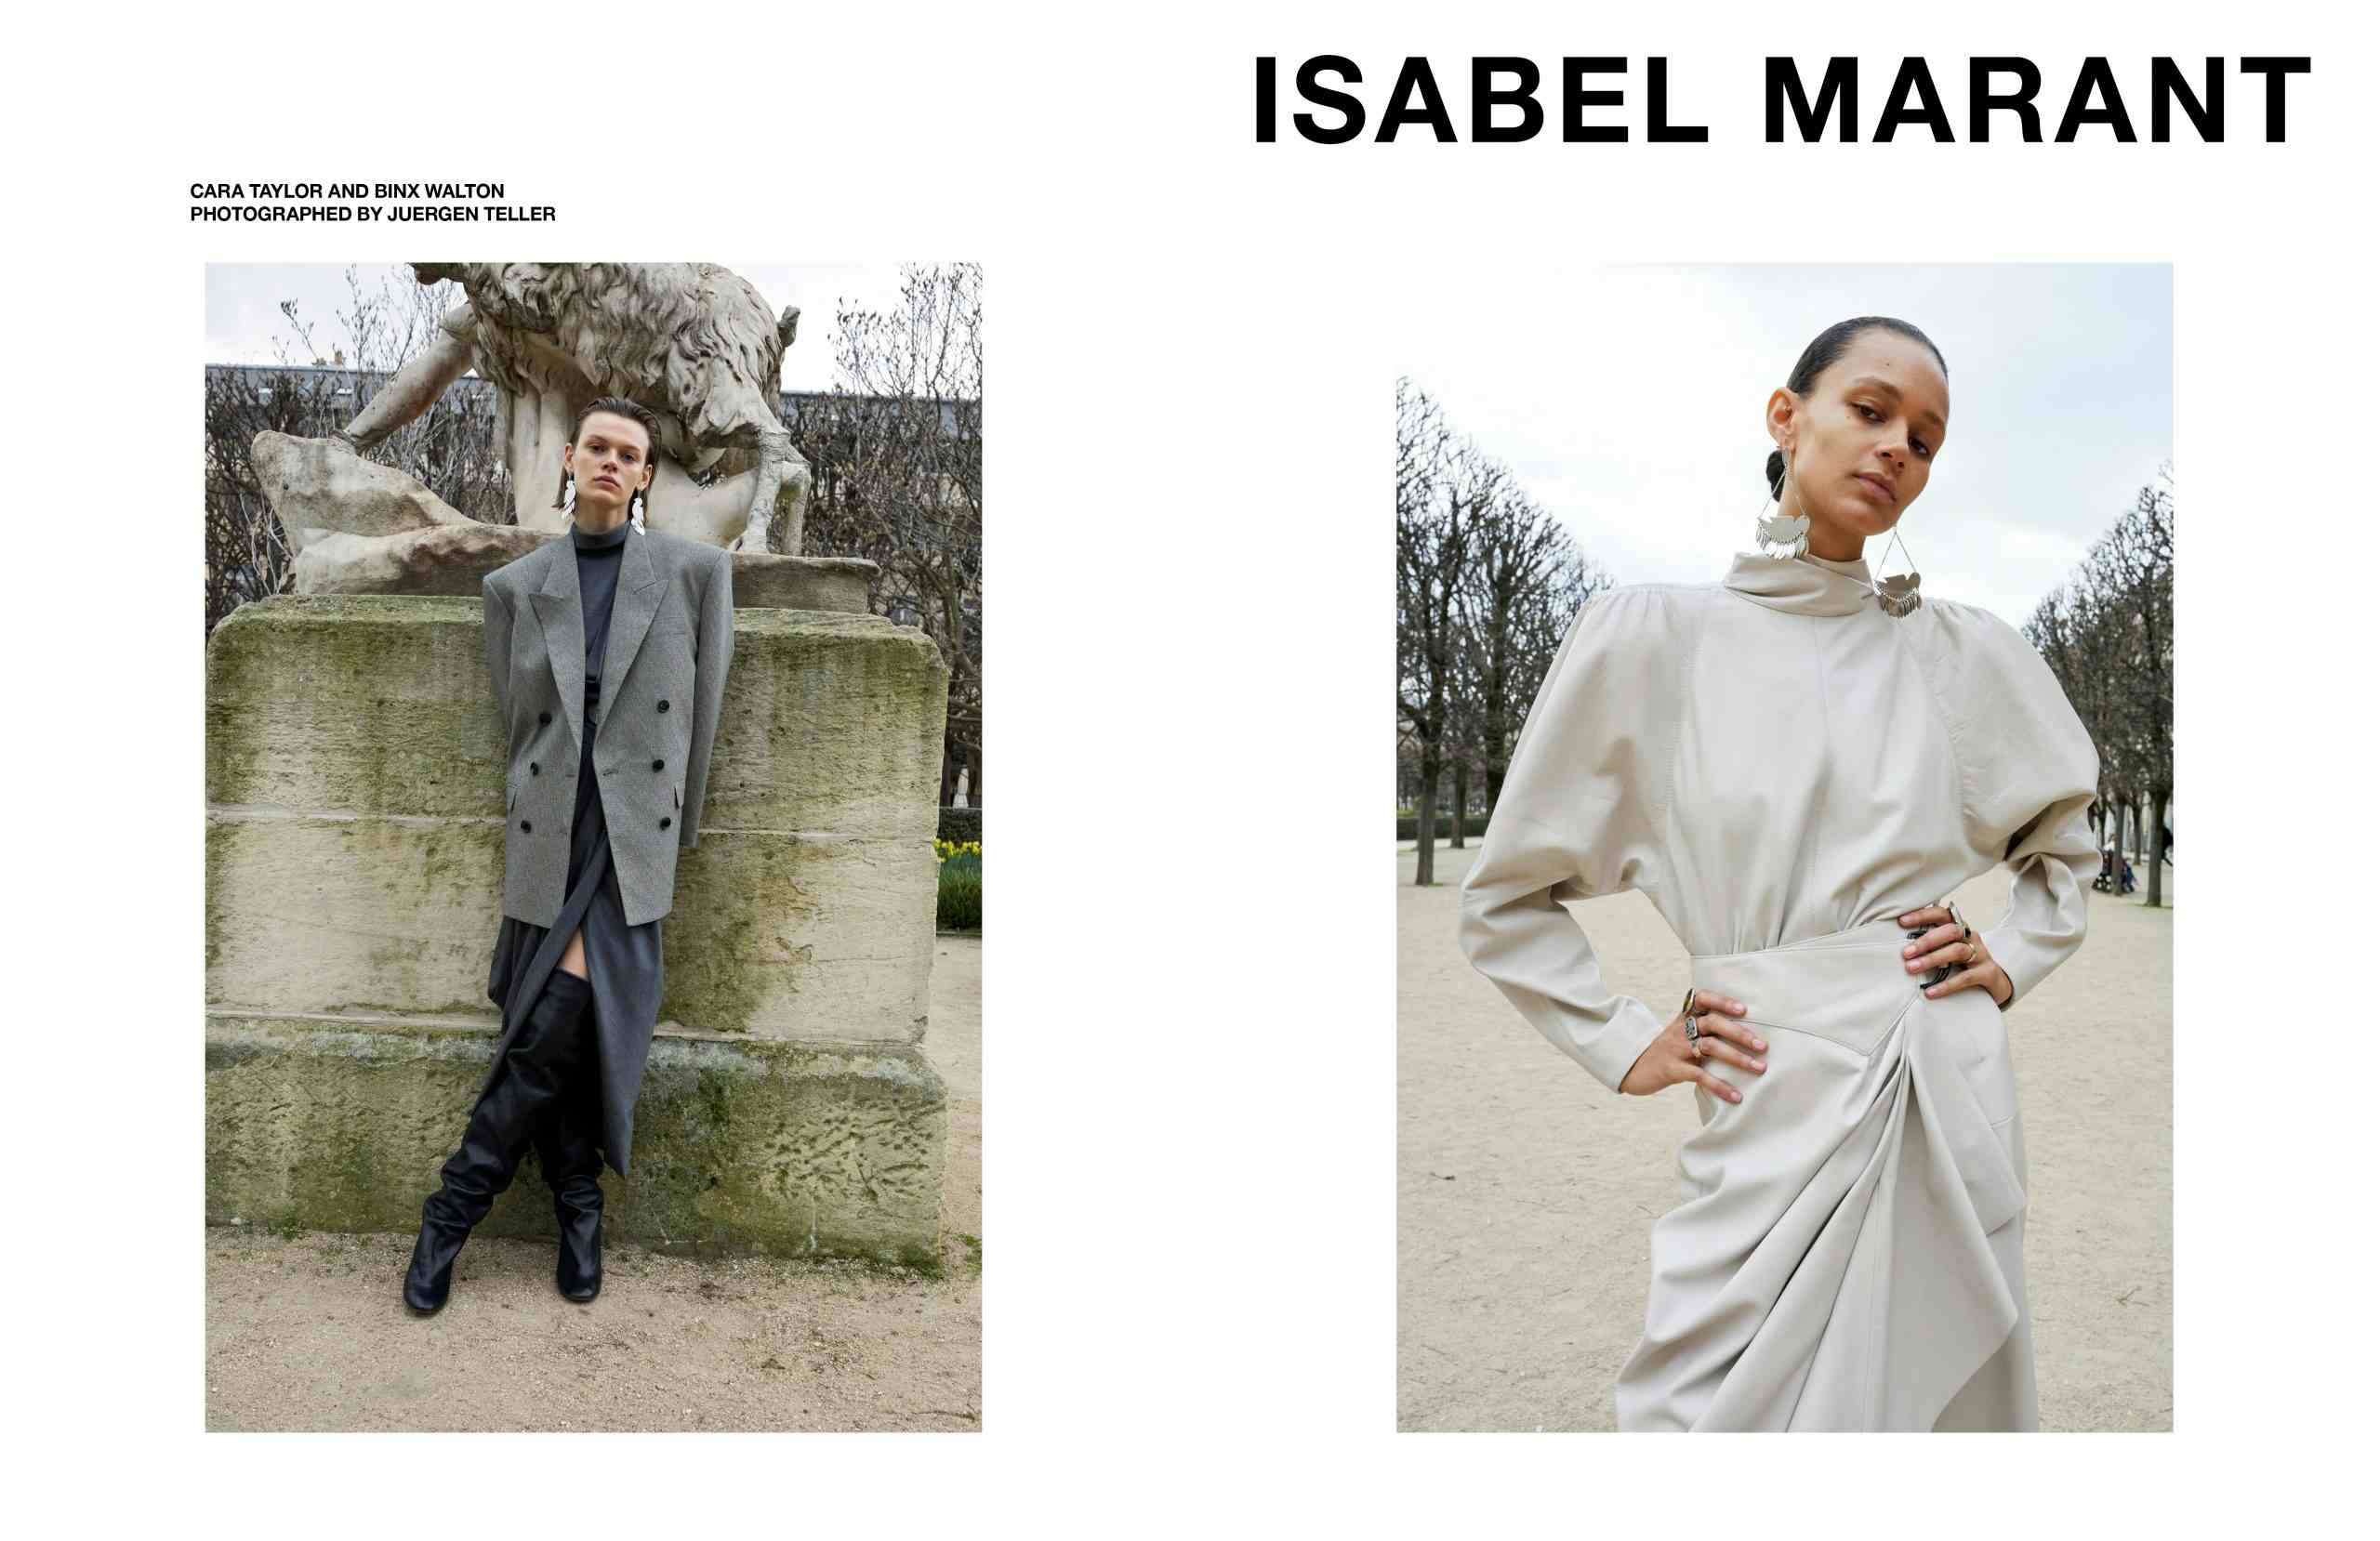 ISABEL MARANT - Fall 2019 Campaign
Photographer: Juergen Teller
Model: Anna Ewers, Cara Tylor, Binx, Parker Van Noord
Stylist: Géraldine Saglio
Location: Paris